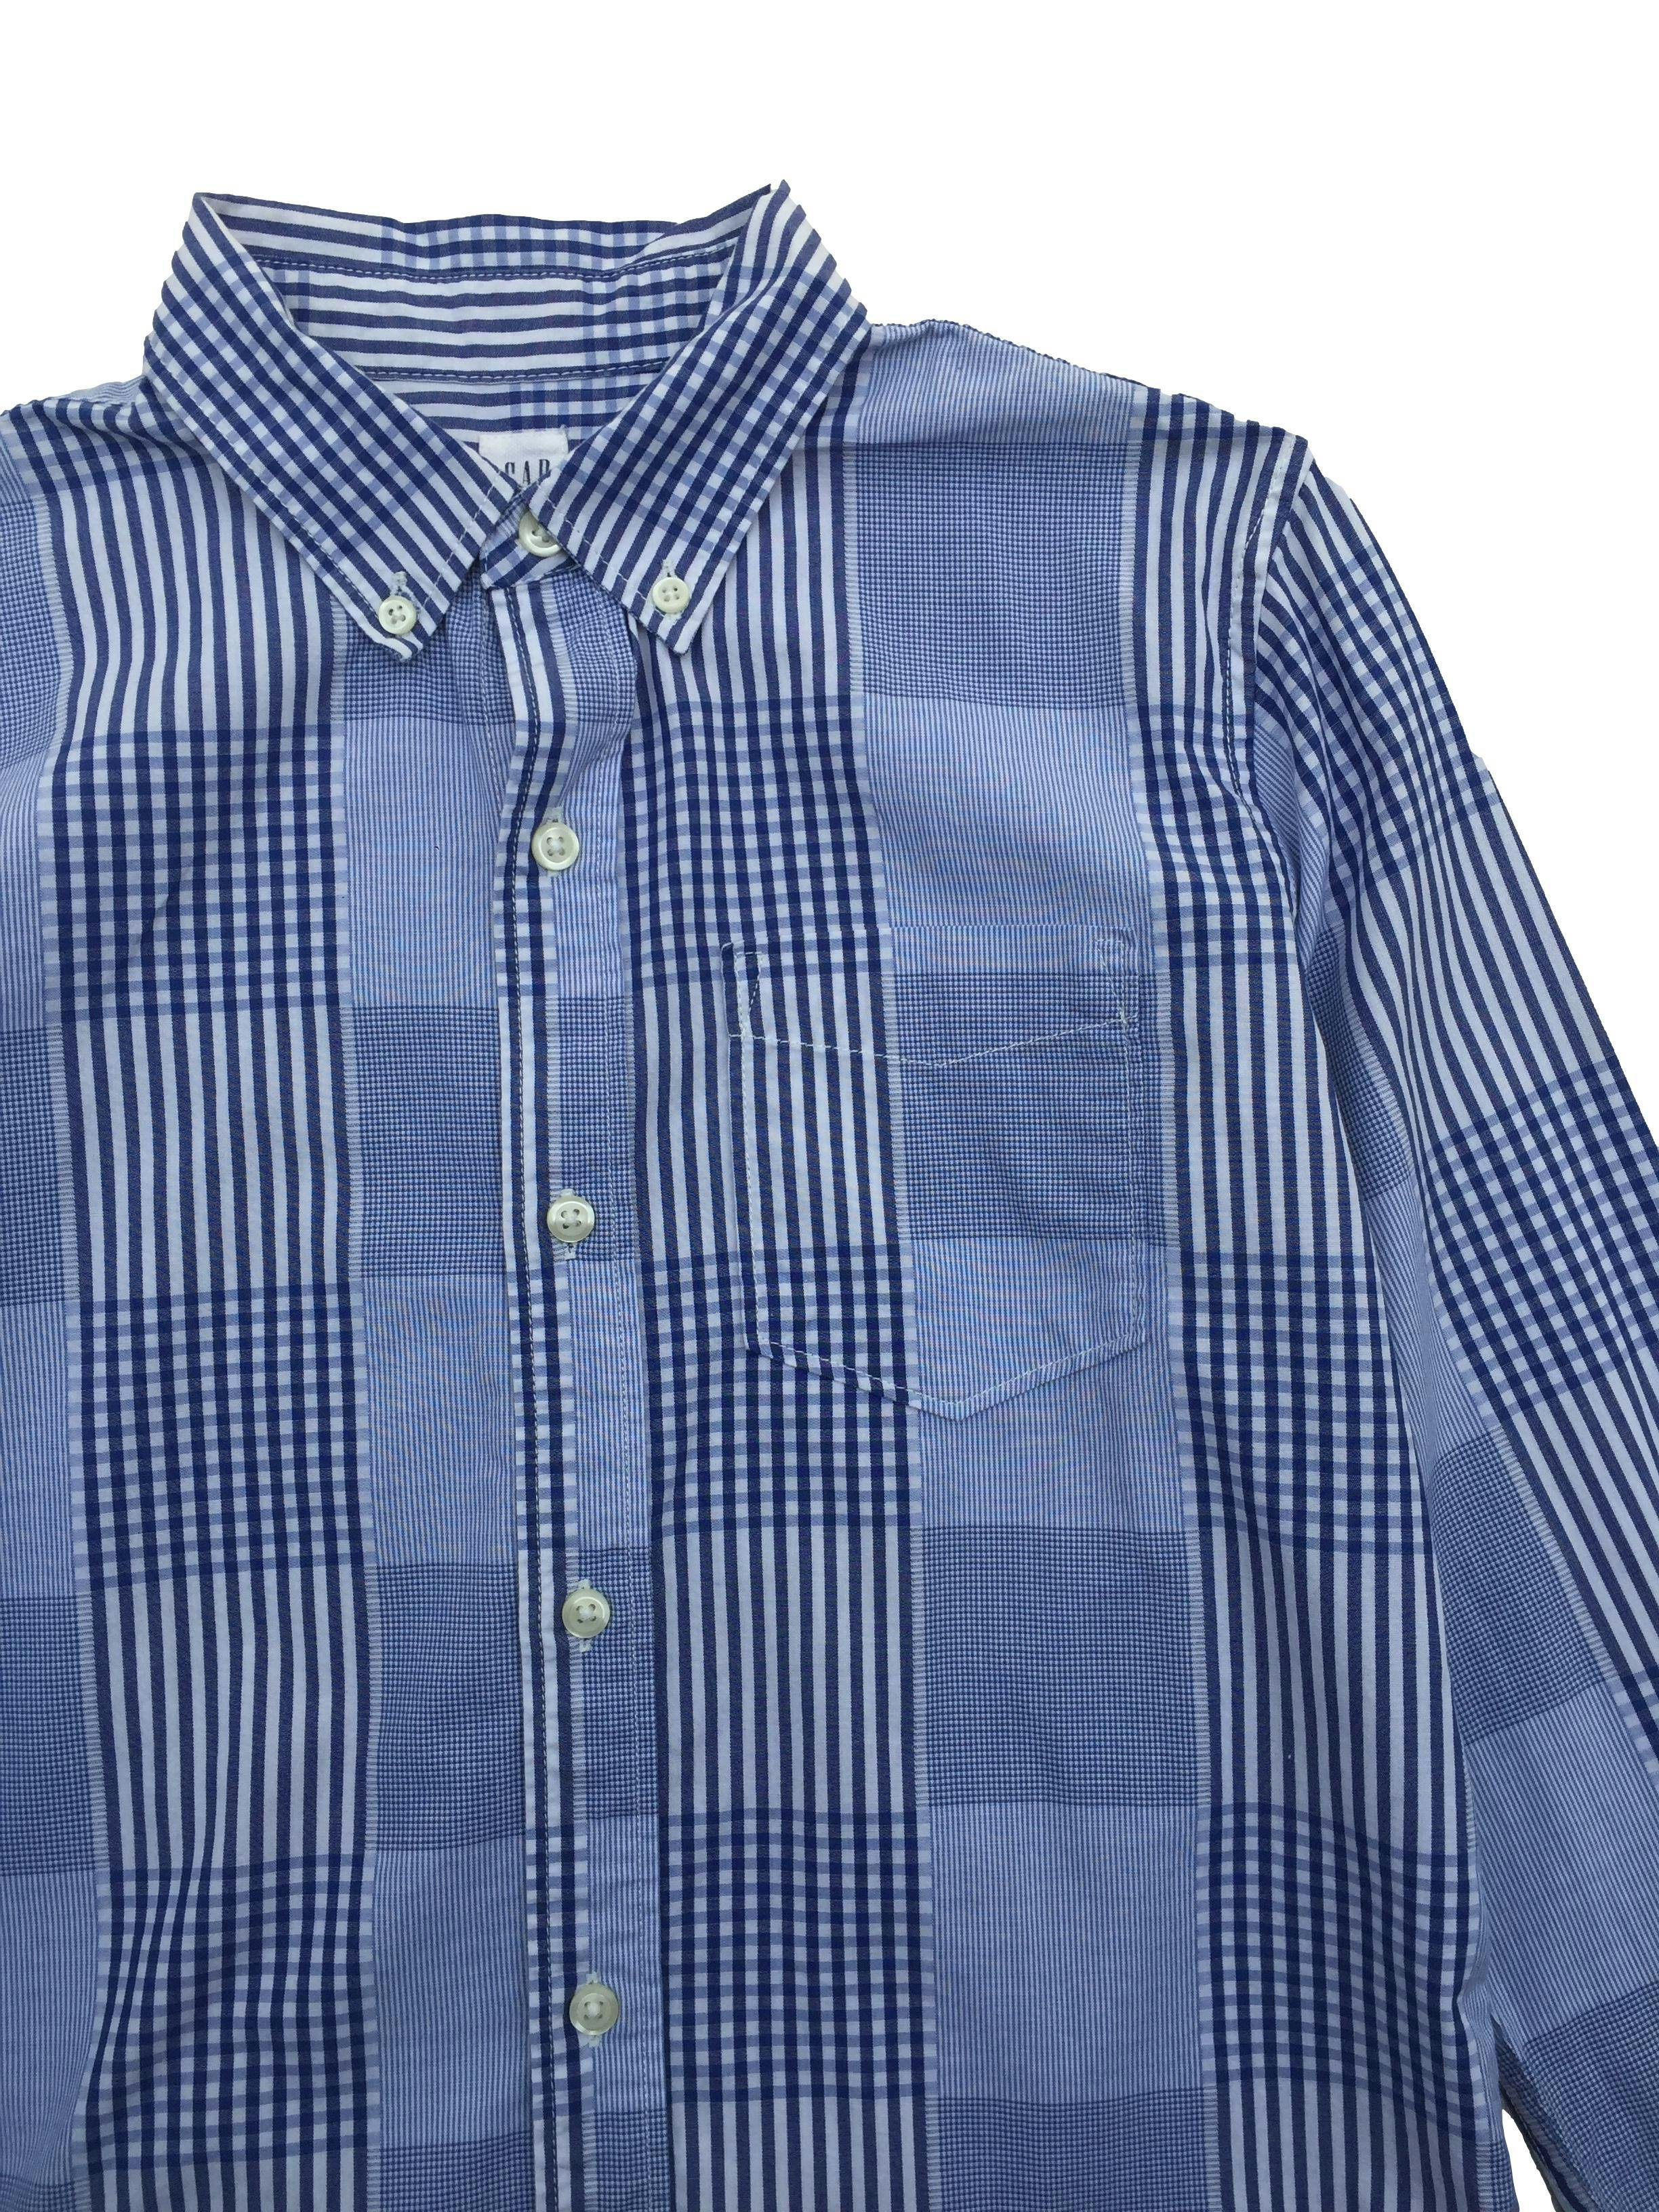 Camisa Gap a cuadros azules y blancos , 100% algodón